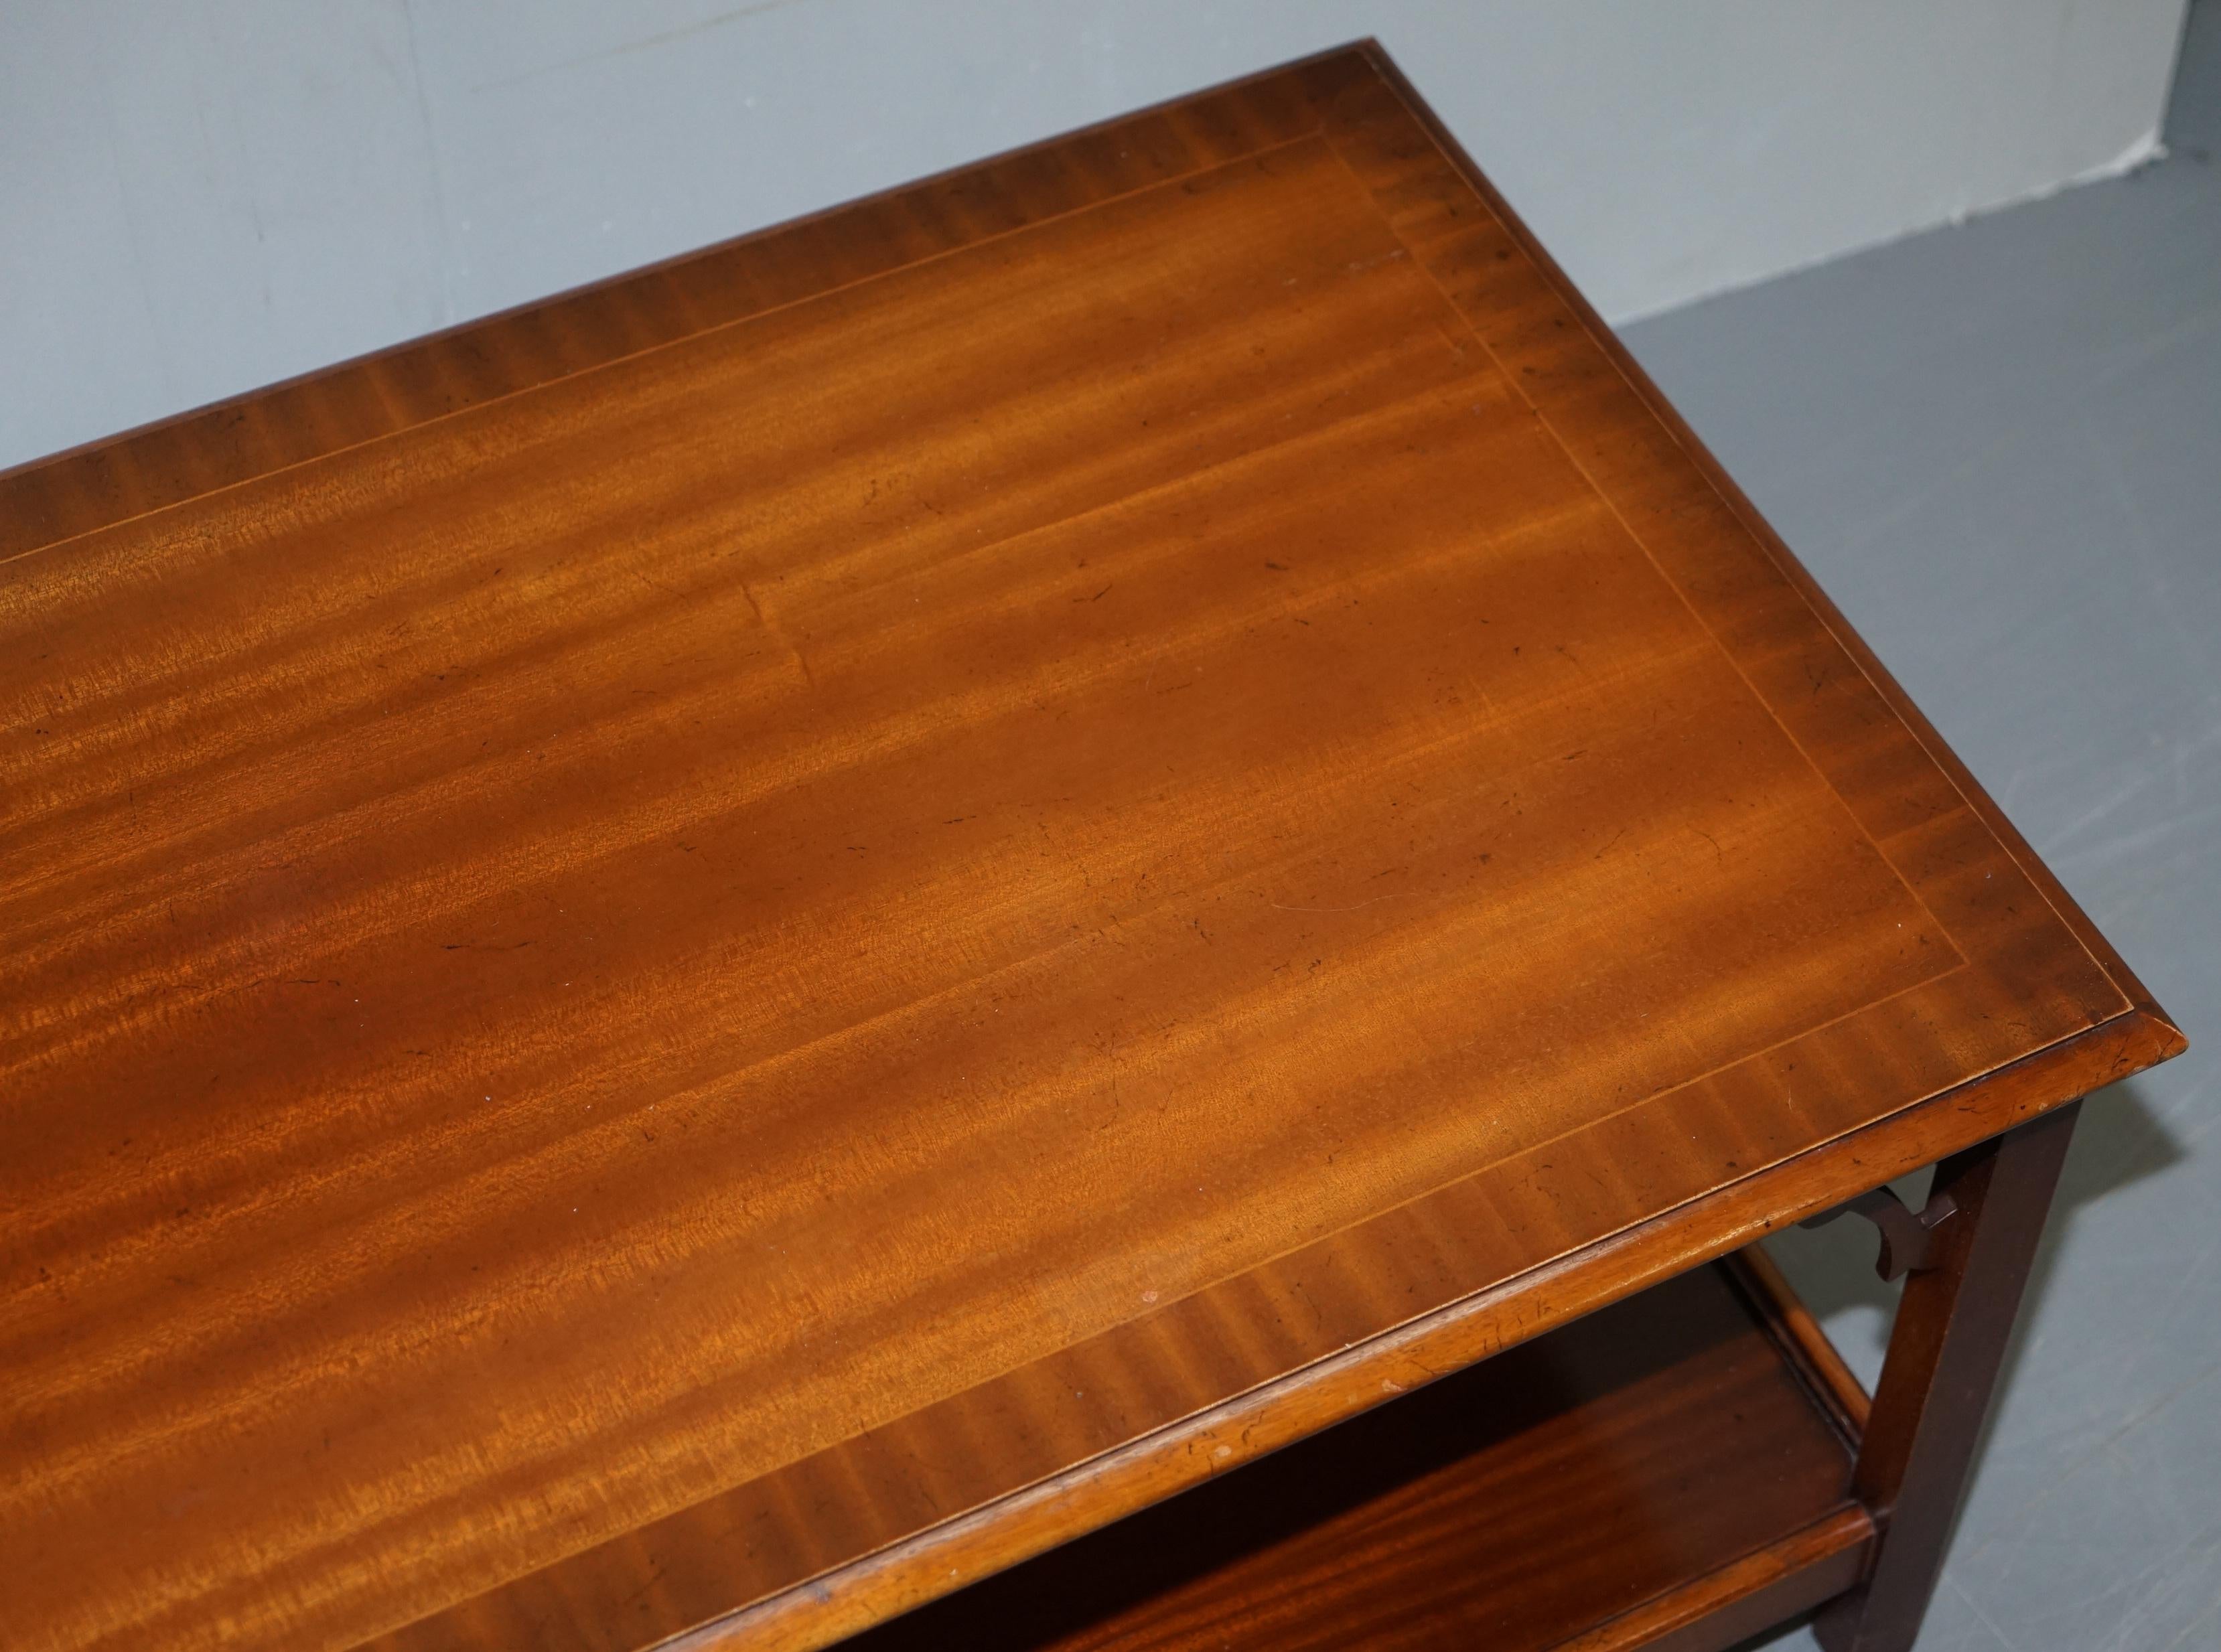 English Lovely Vintage Flamed Hardwood Bradley Furniture Long Coffee Table Nice Design